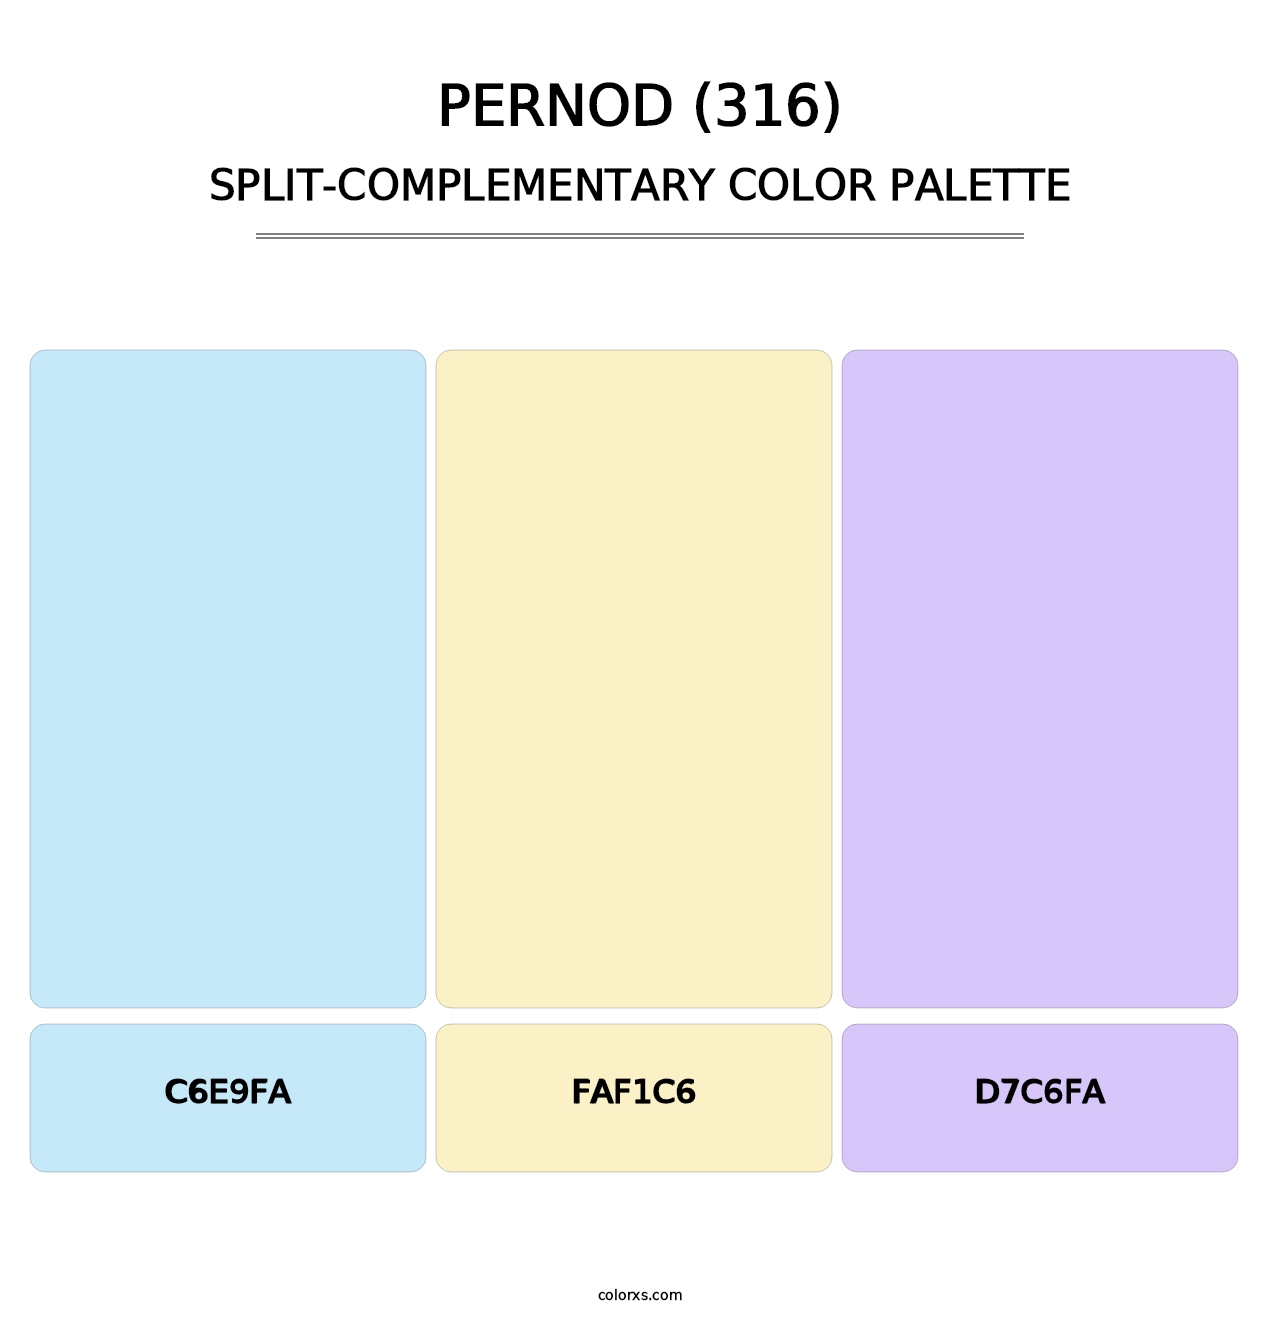 Pernod (316) - Split-Complementary Color Palette